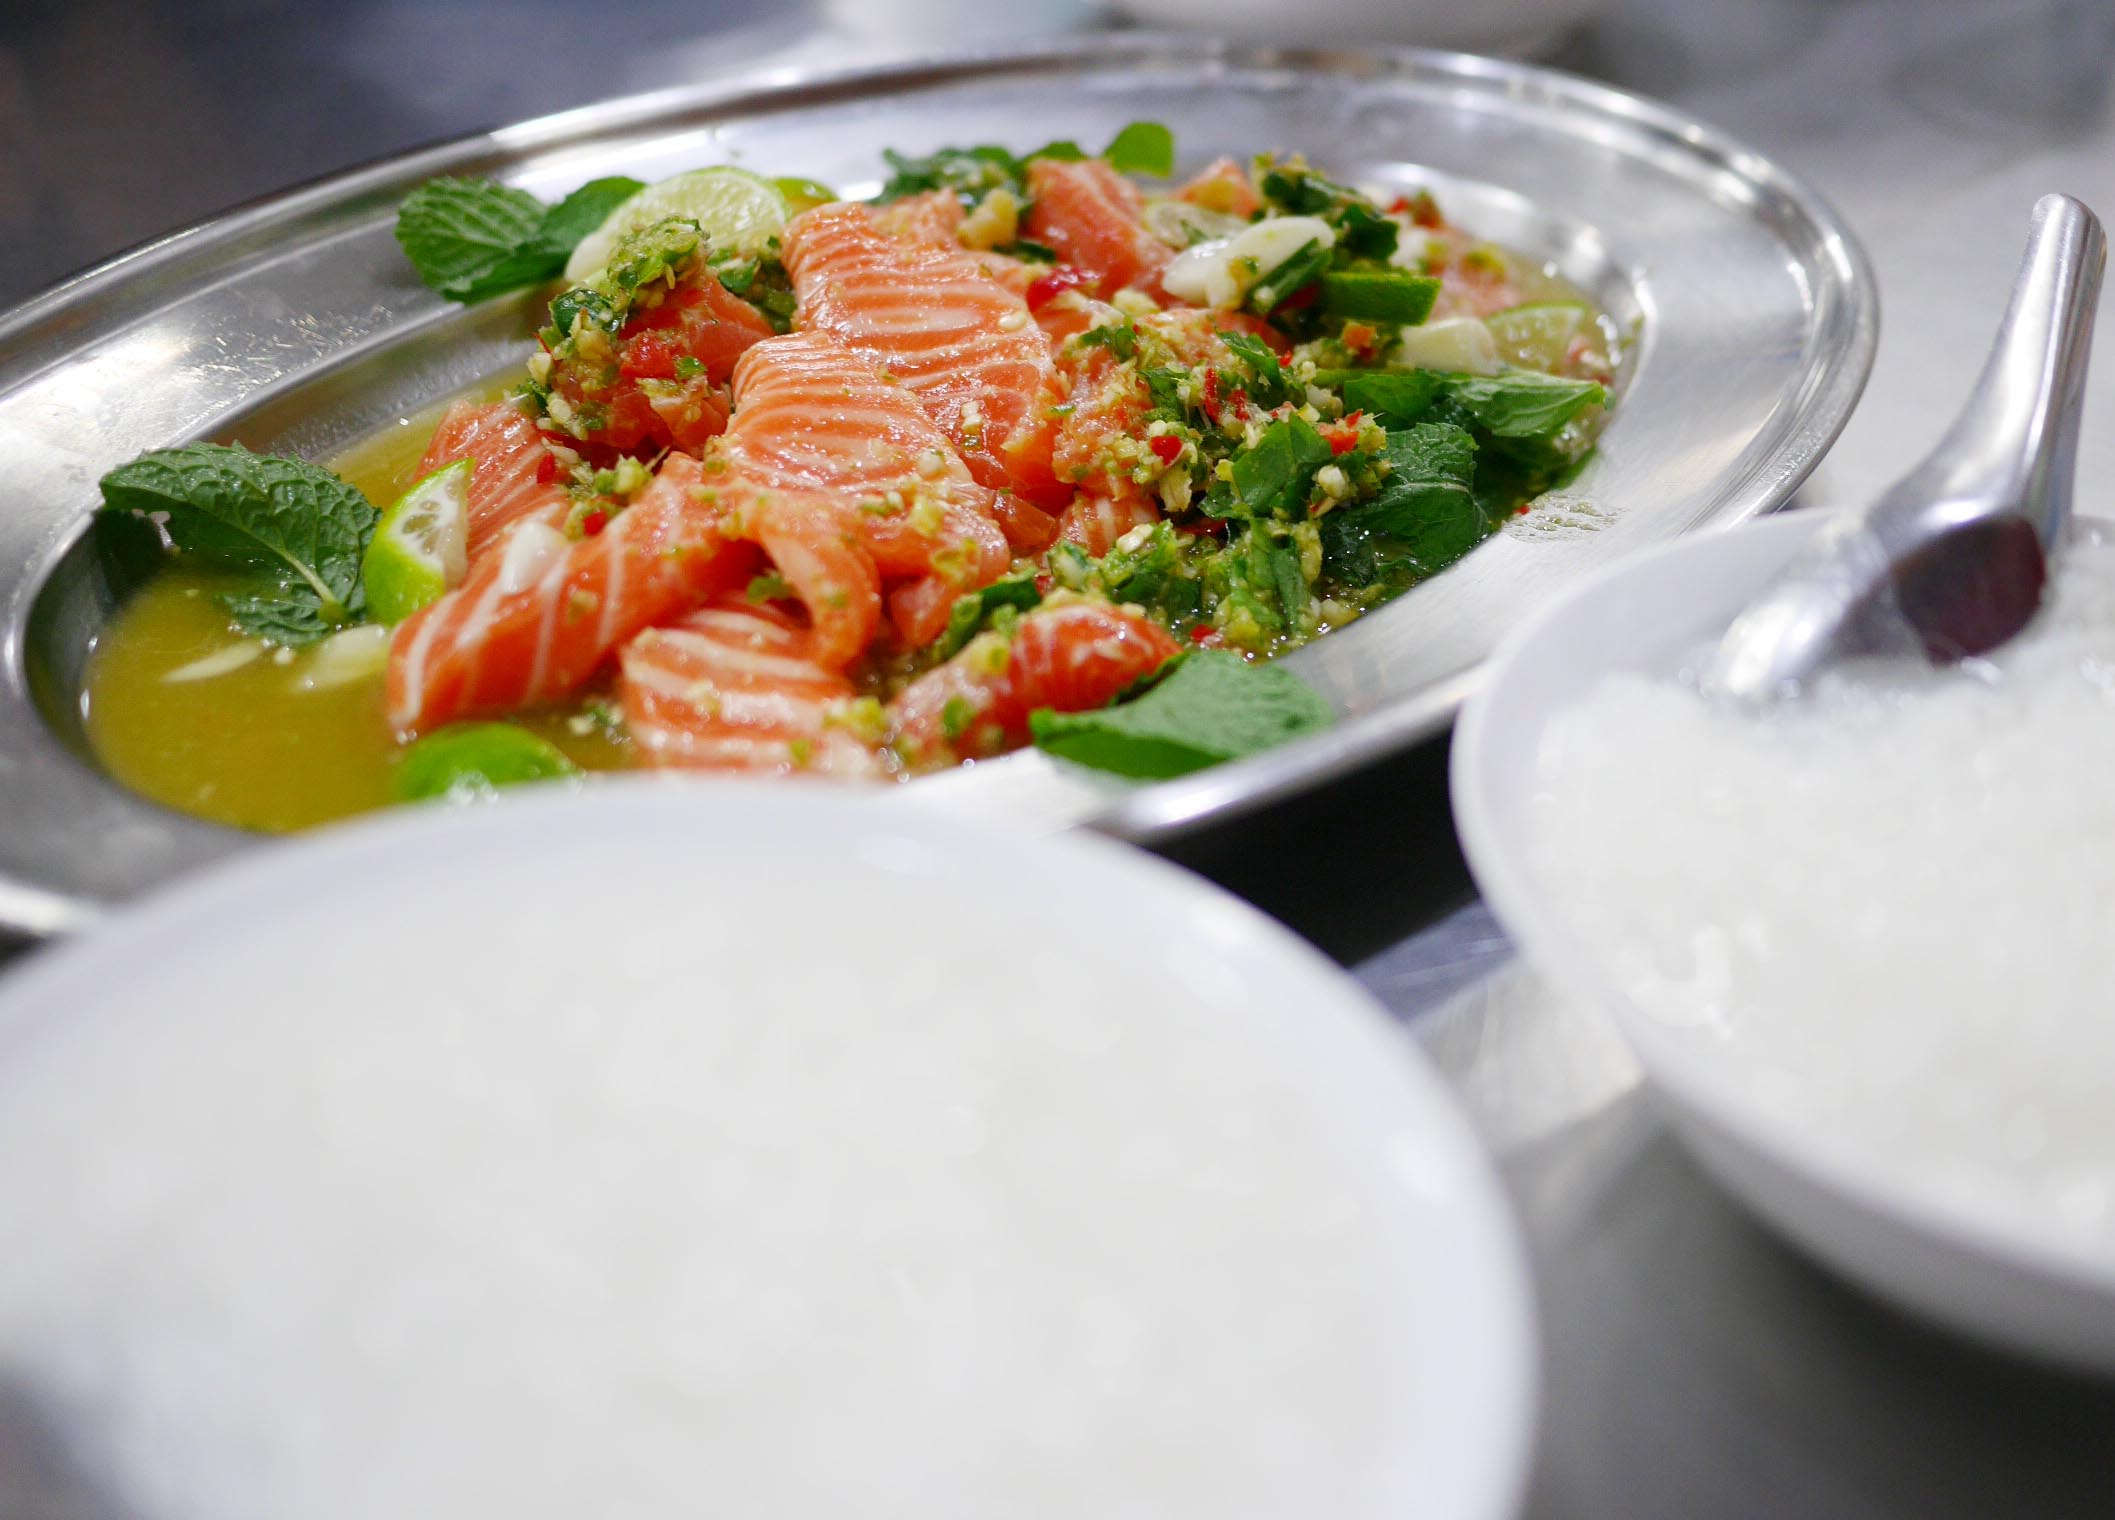 Image result for jeh o chula bangkok spicy salmon